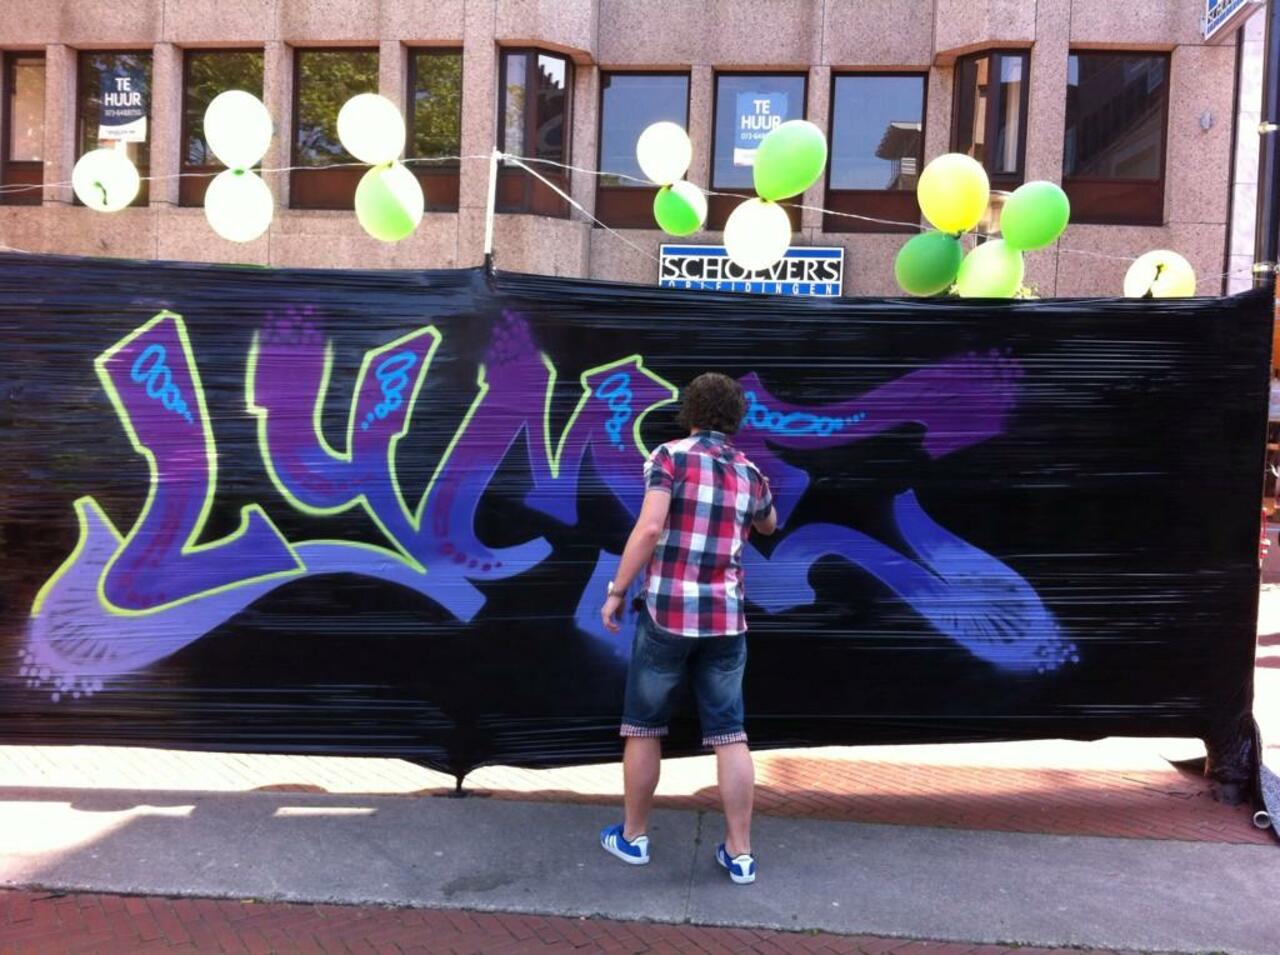 #BrandPromotion #Decorations #LiveShowcase #graffiti #art Check: http://www.scanone.jouwweb.nl @NLVogue @TeenVogue @Playboy http://t.co/nVVXl5ZeZU